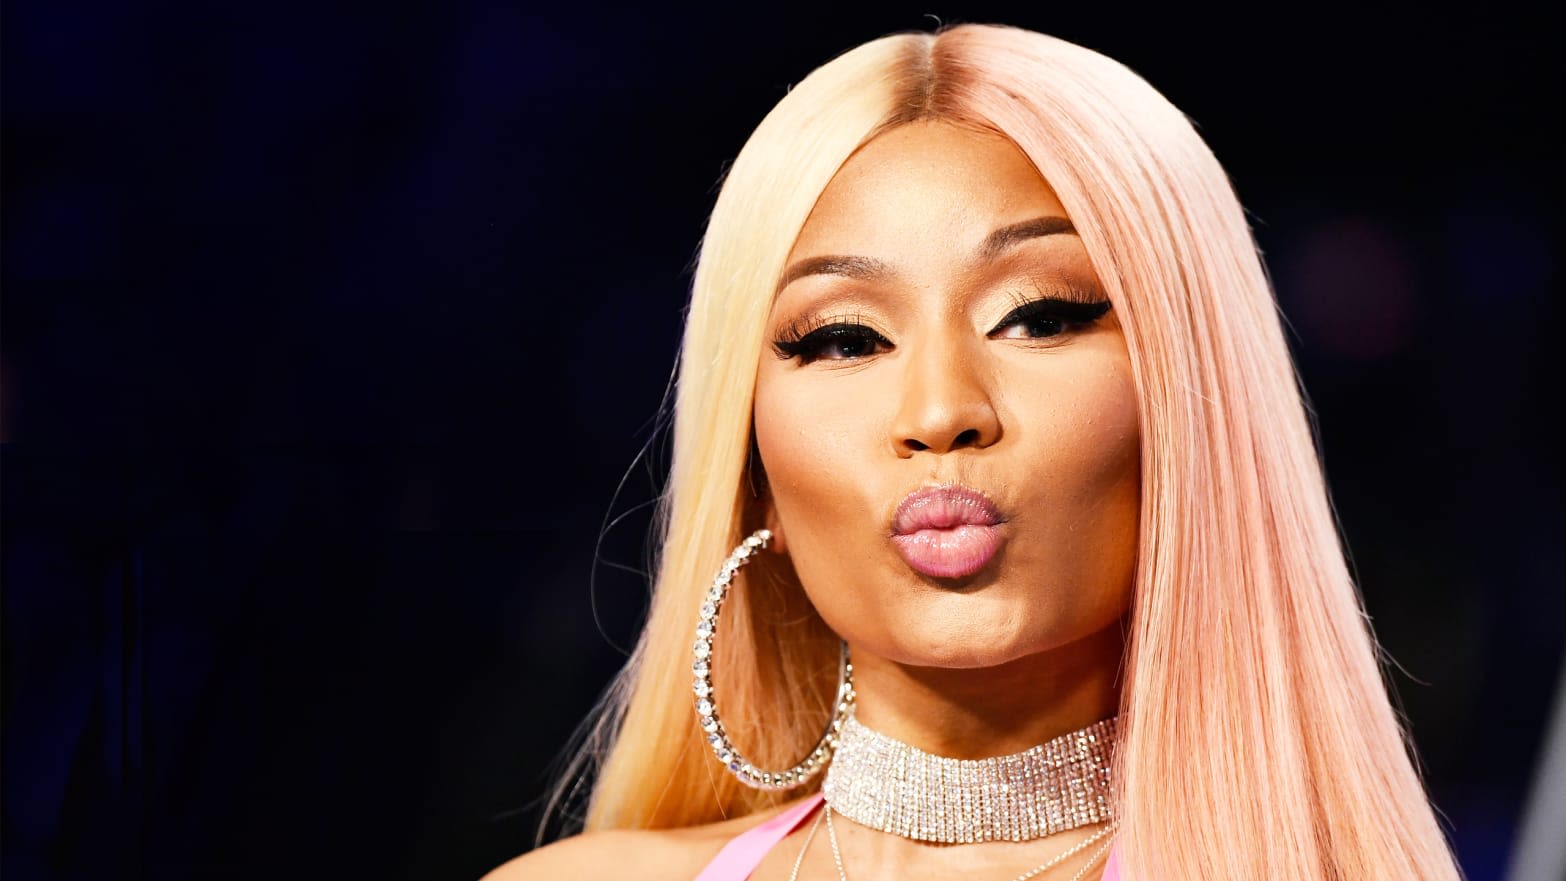 The Source |Nicki Minaj Wraps Up Pink Friday 2 Tour with Record-Breaking Success